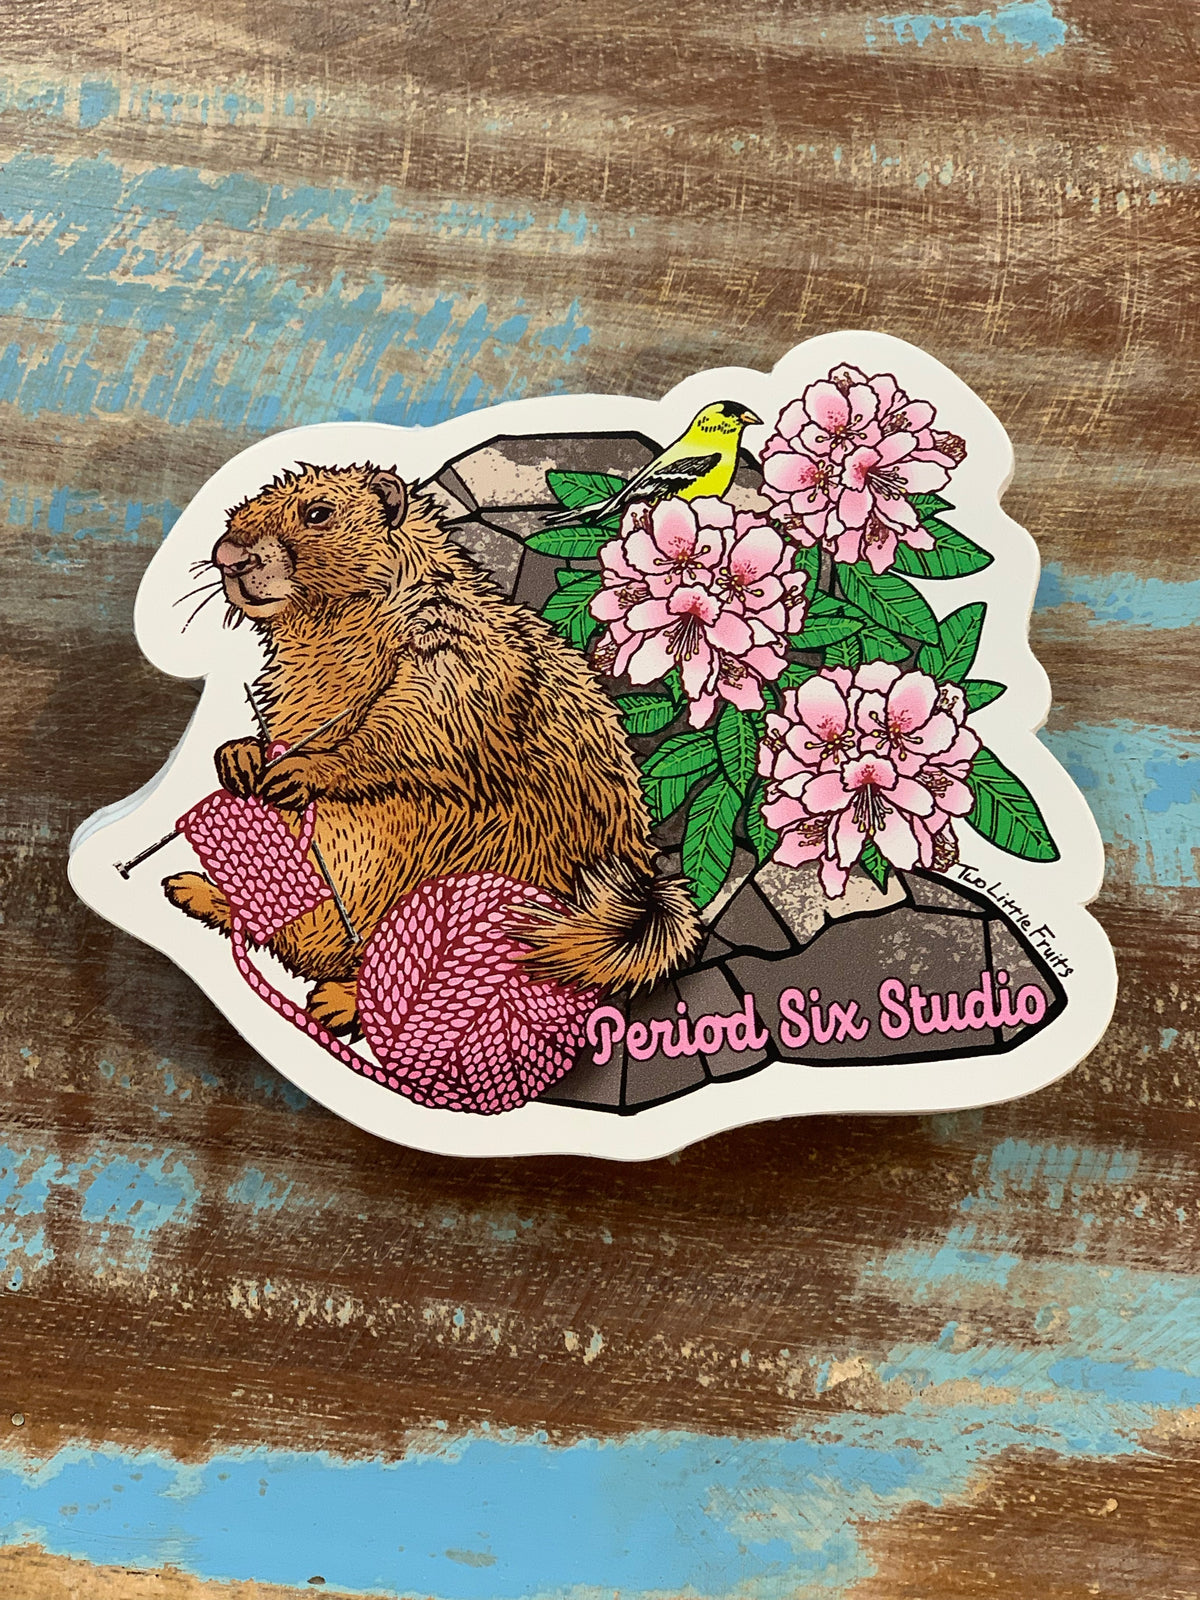 Knitting Marmot Illustration on a Vinyl Sticker with Period Six Studio written along the bottom